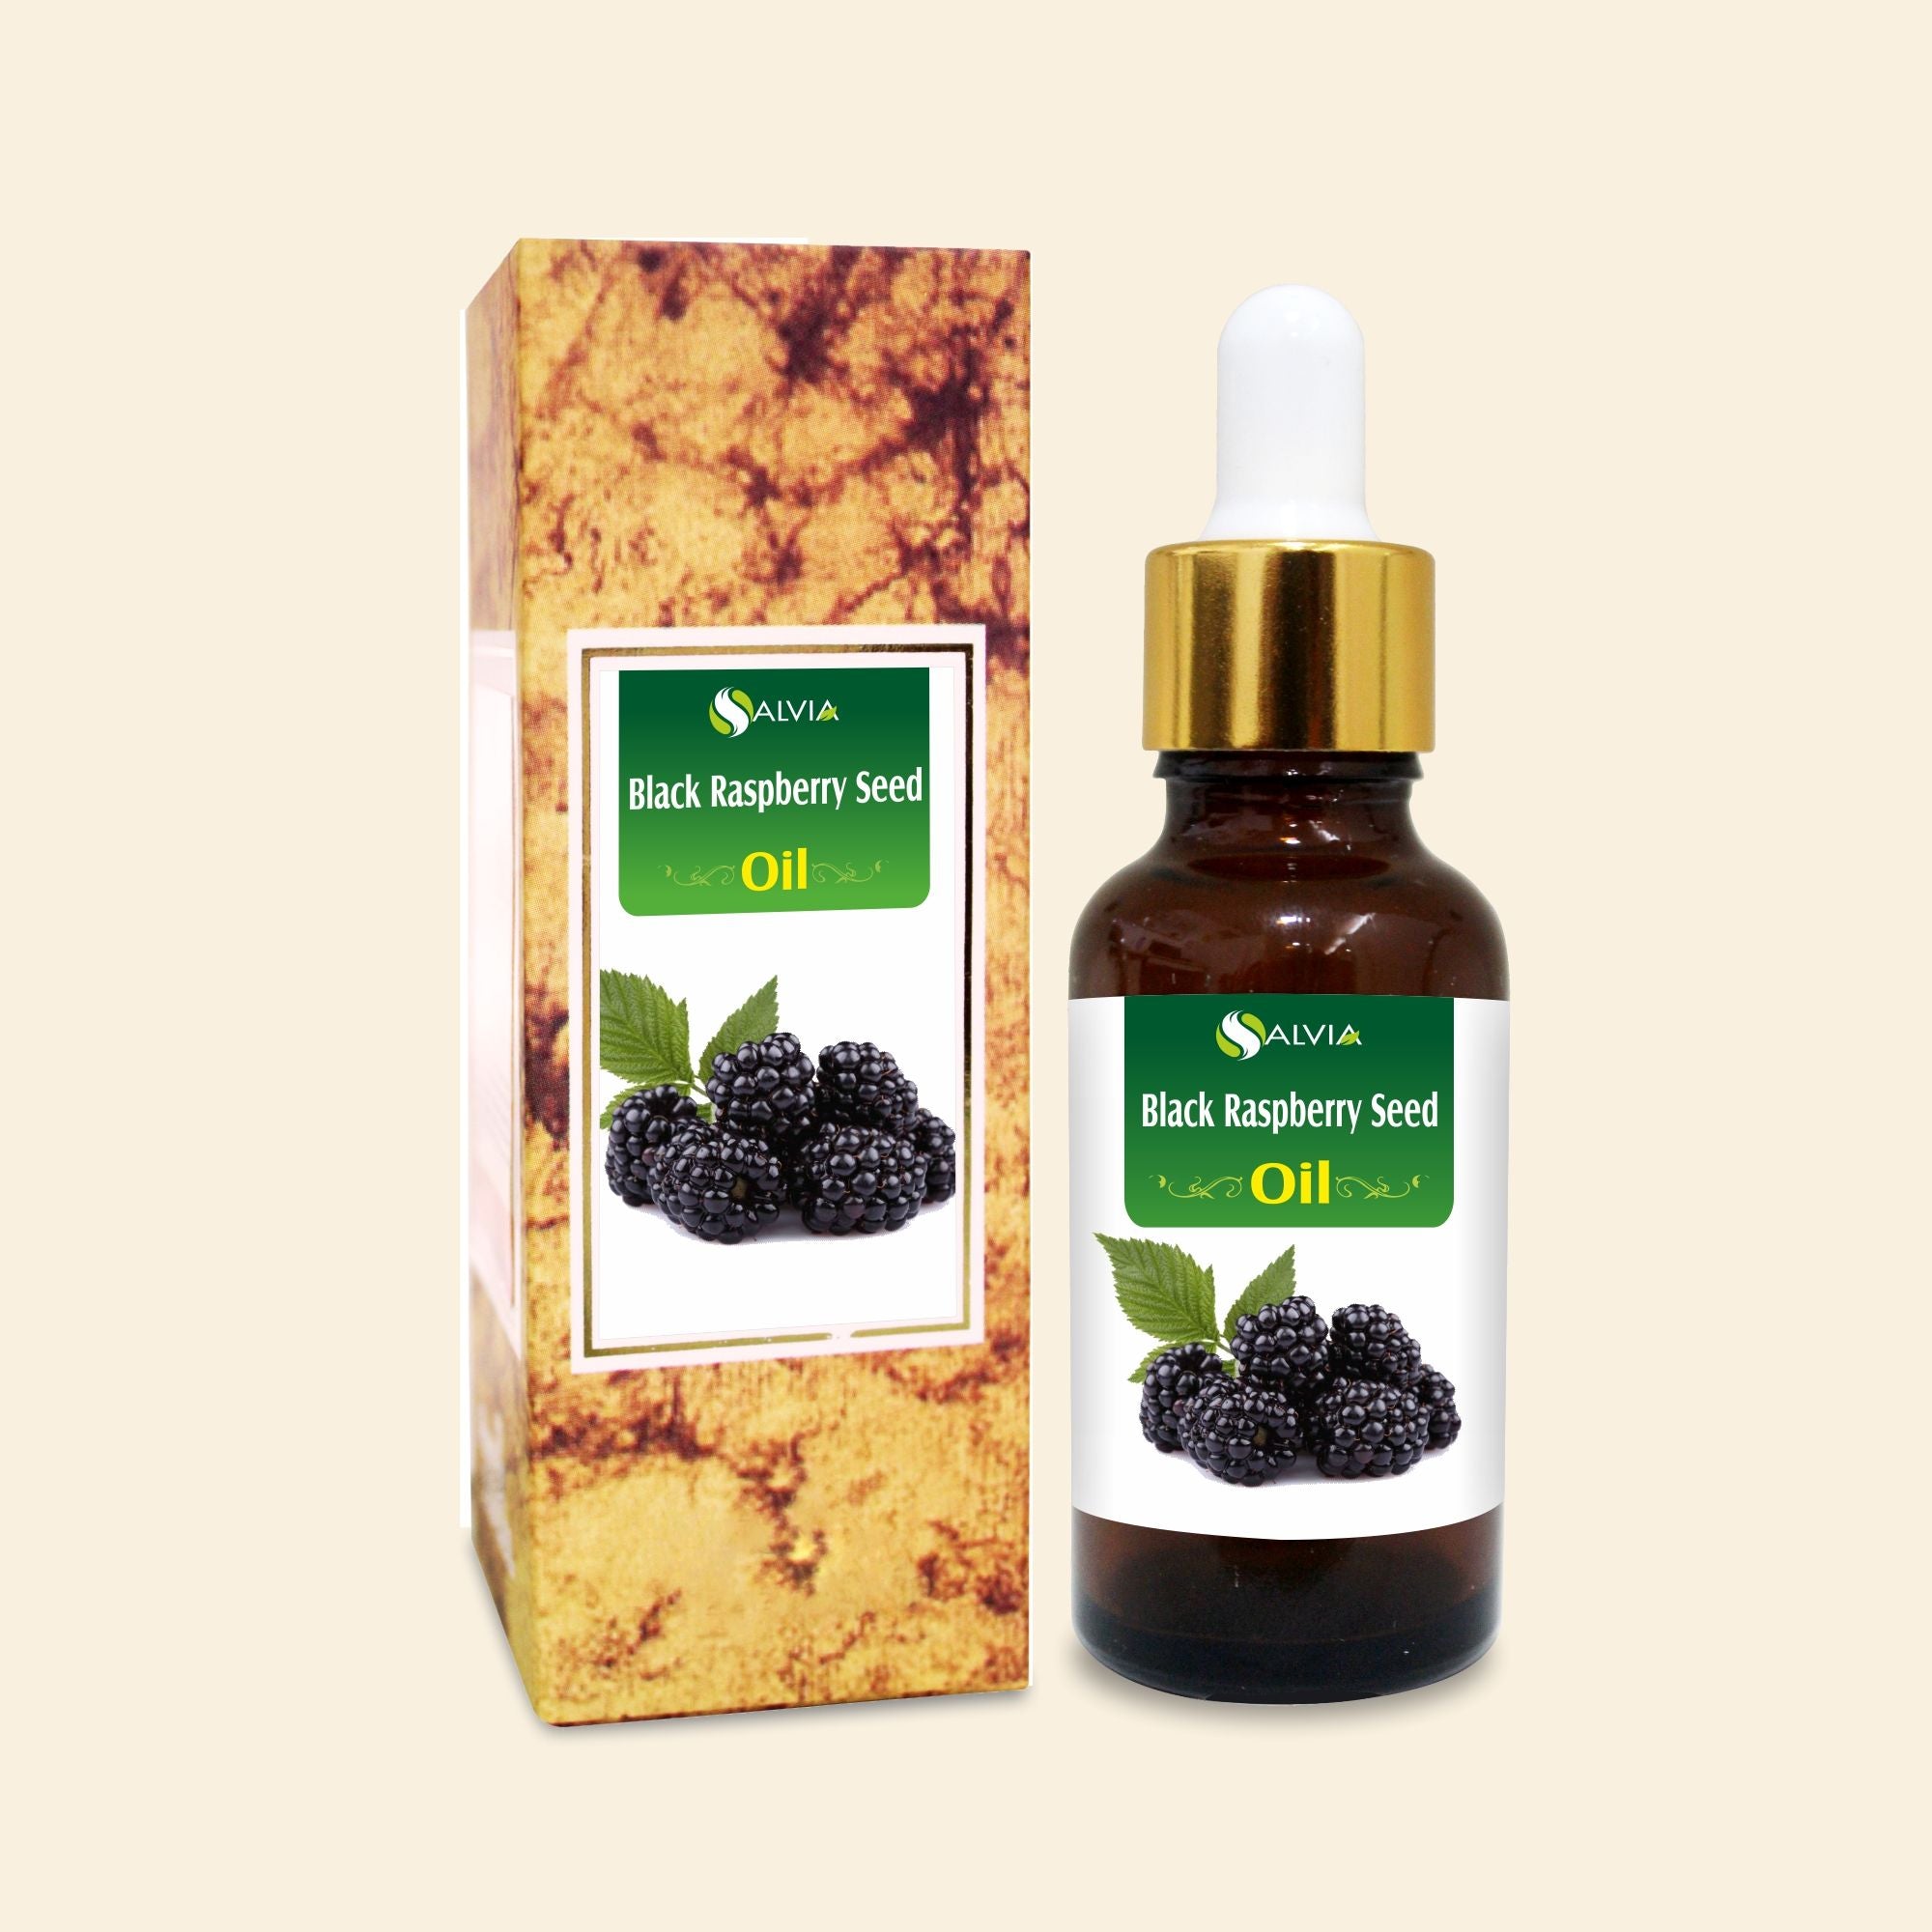 Salvia Natural Carrier Oils Black Raspberry Seed Oil